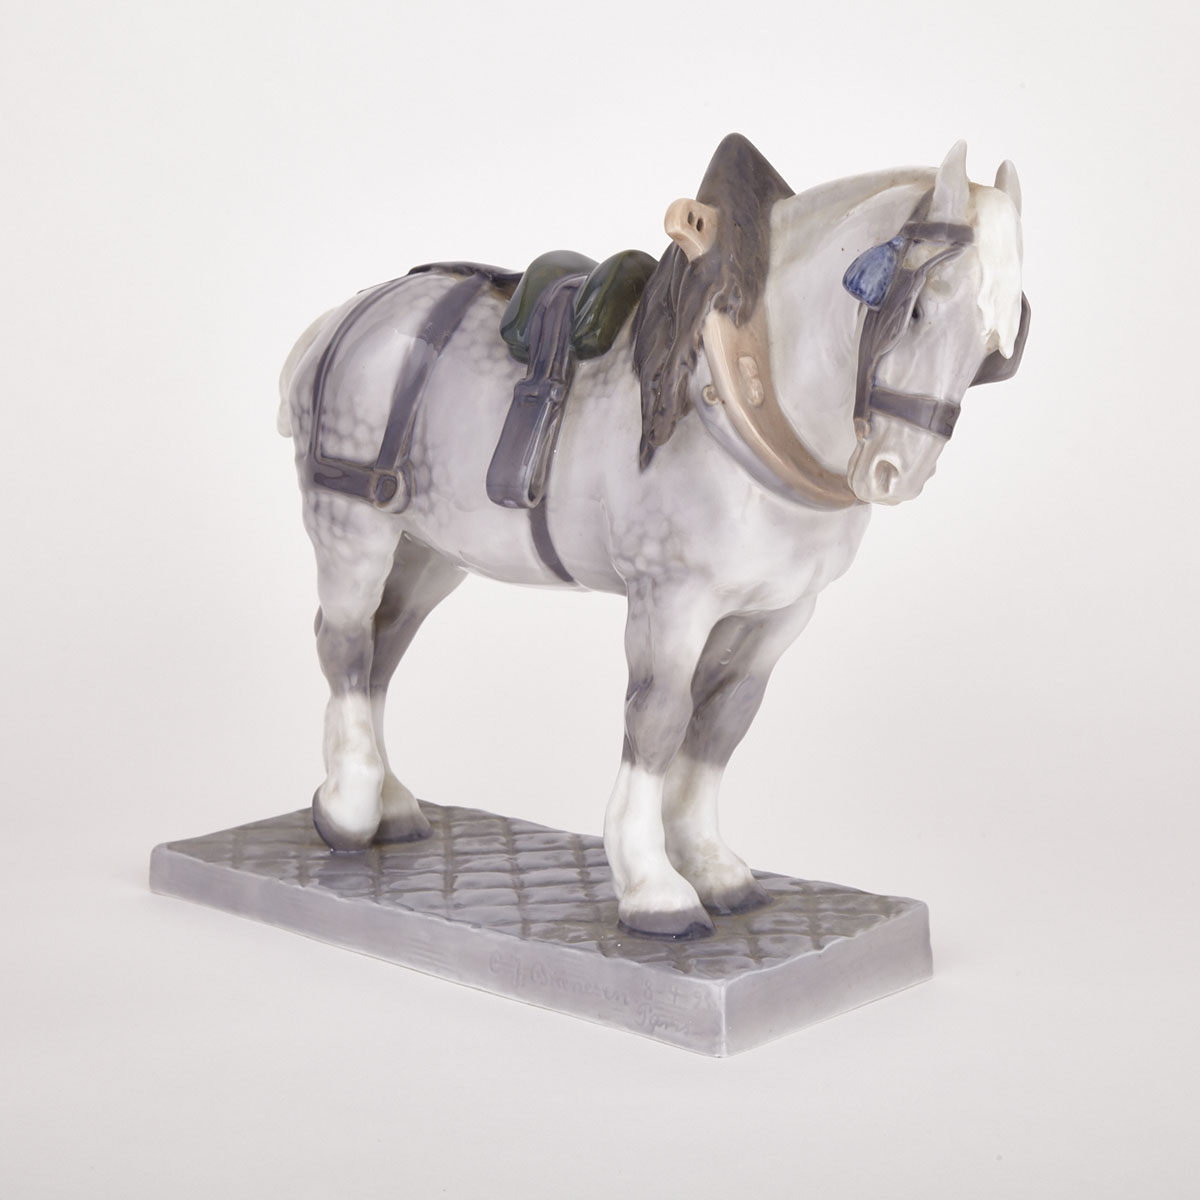 Royal Copenhagen Model of a Percheron Cart Horse, C. J. Bonnesen, 20th century 